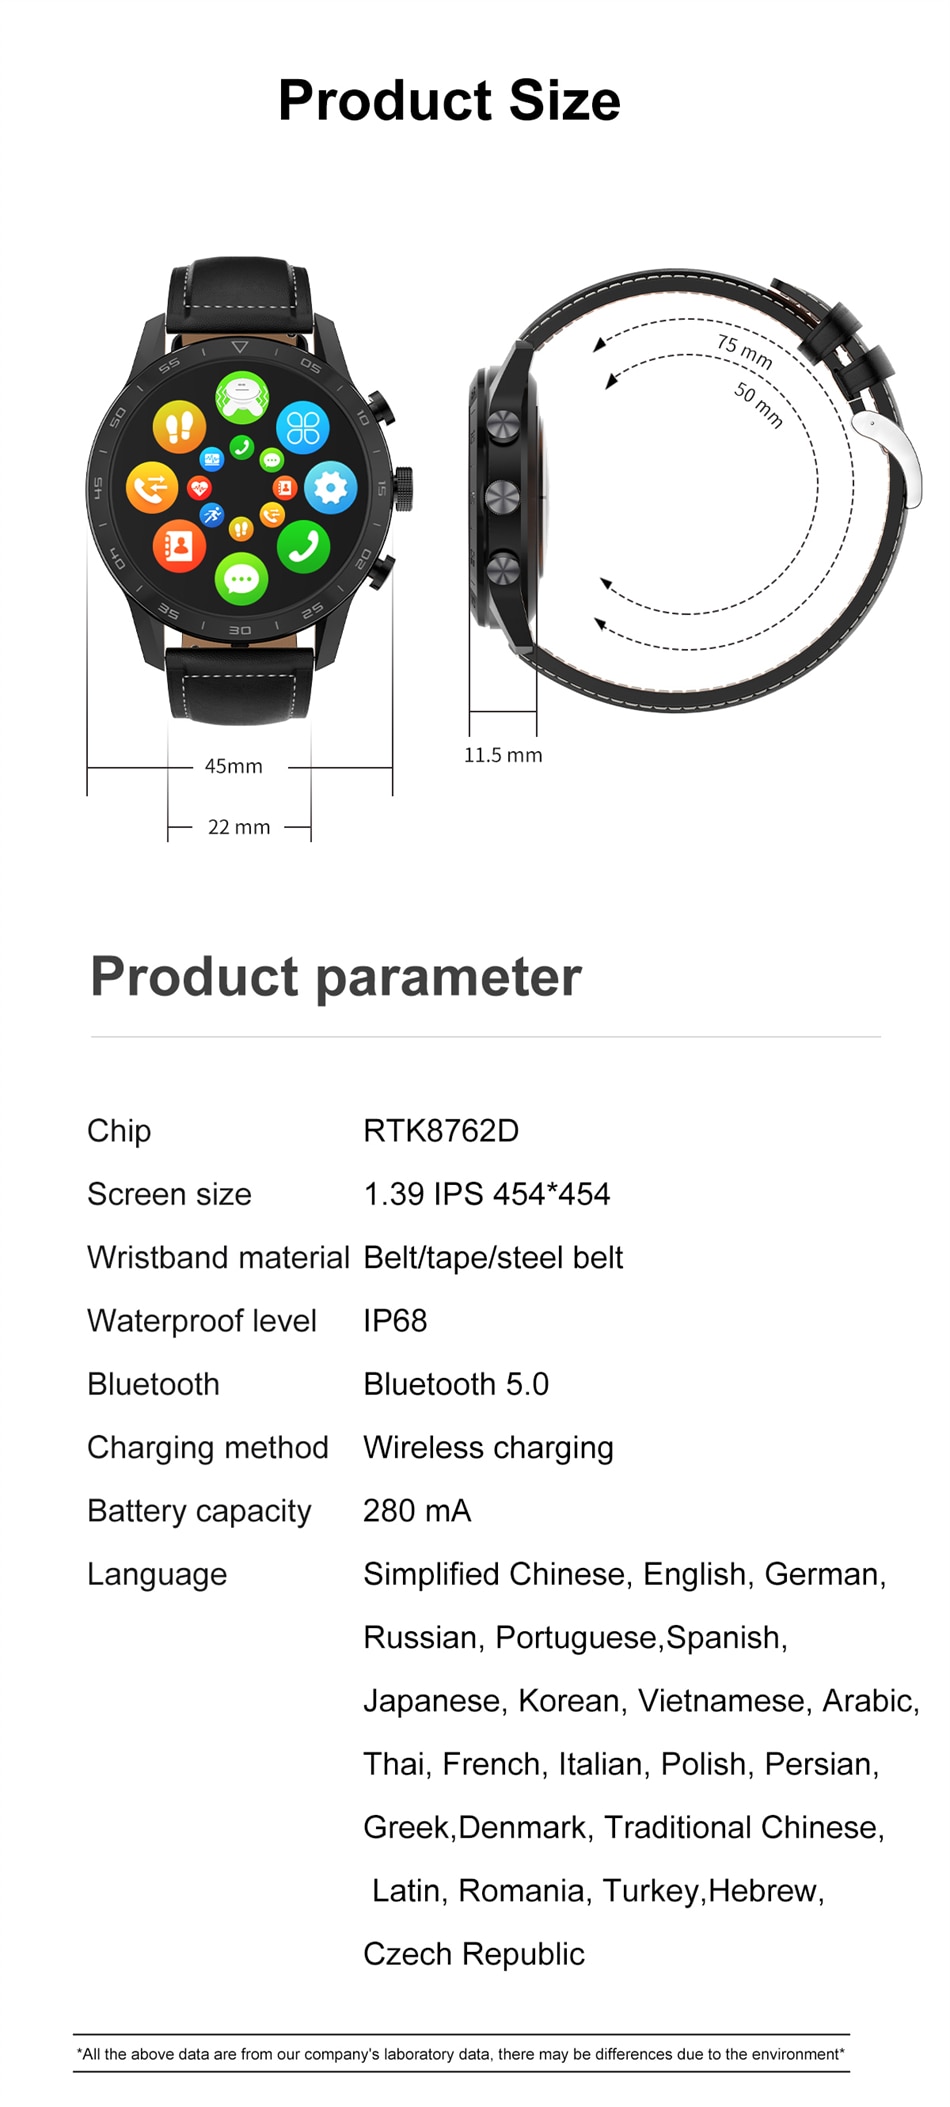 LIGE Warrior Spirit v3.0 – LG260 IP68 Waterproof Smart Watch